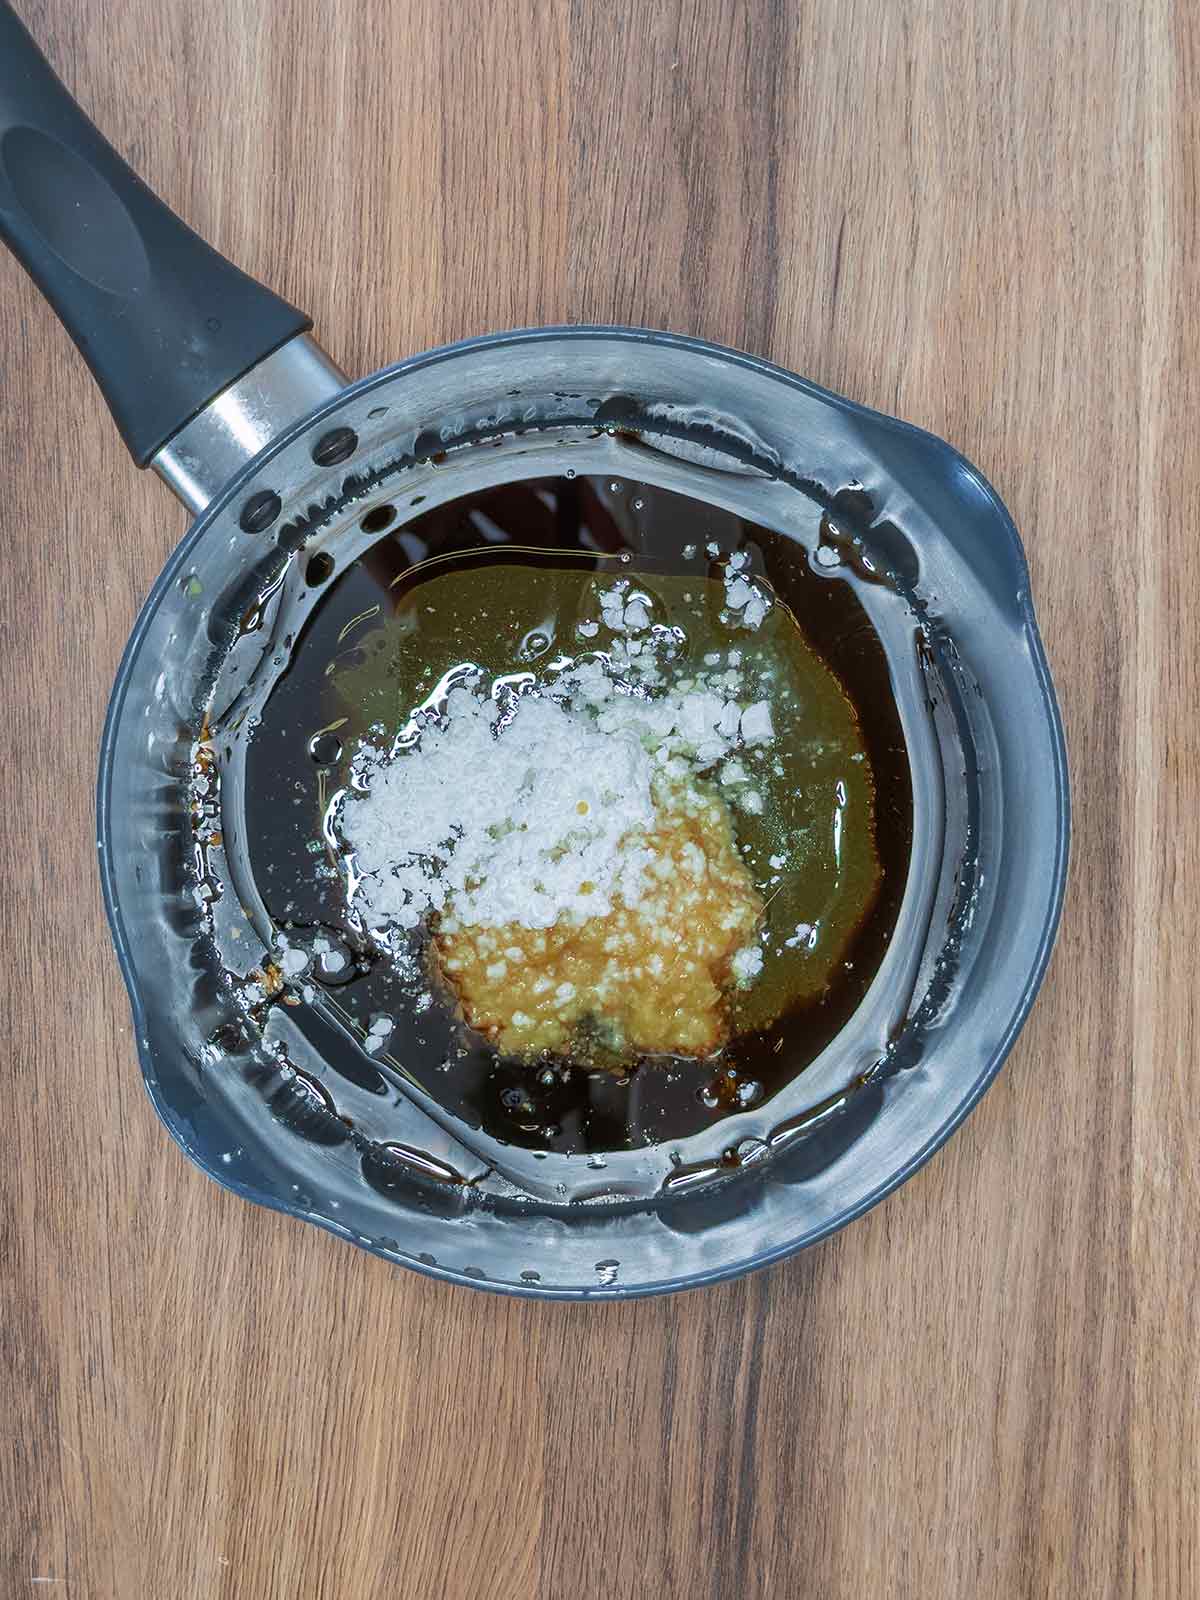 Soy sauce, oil, garlic, ginger and cornflour in a saucepan.